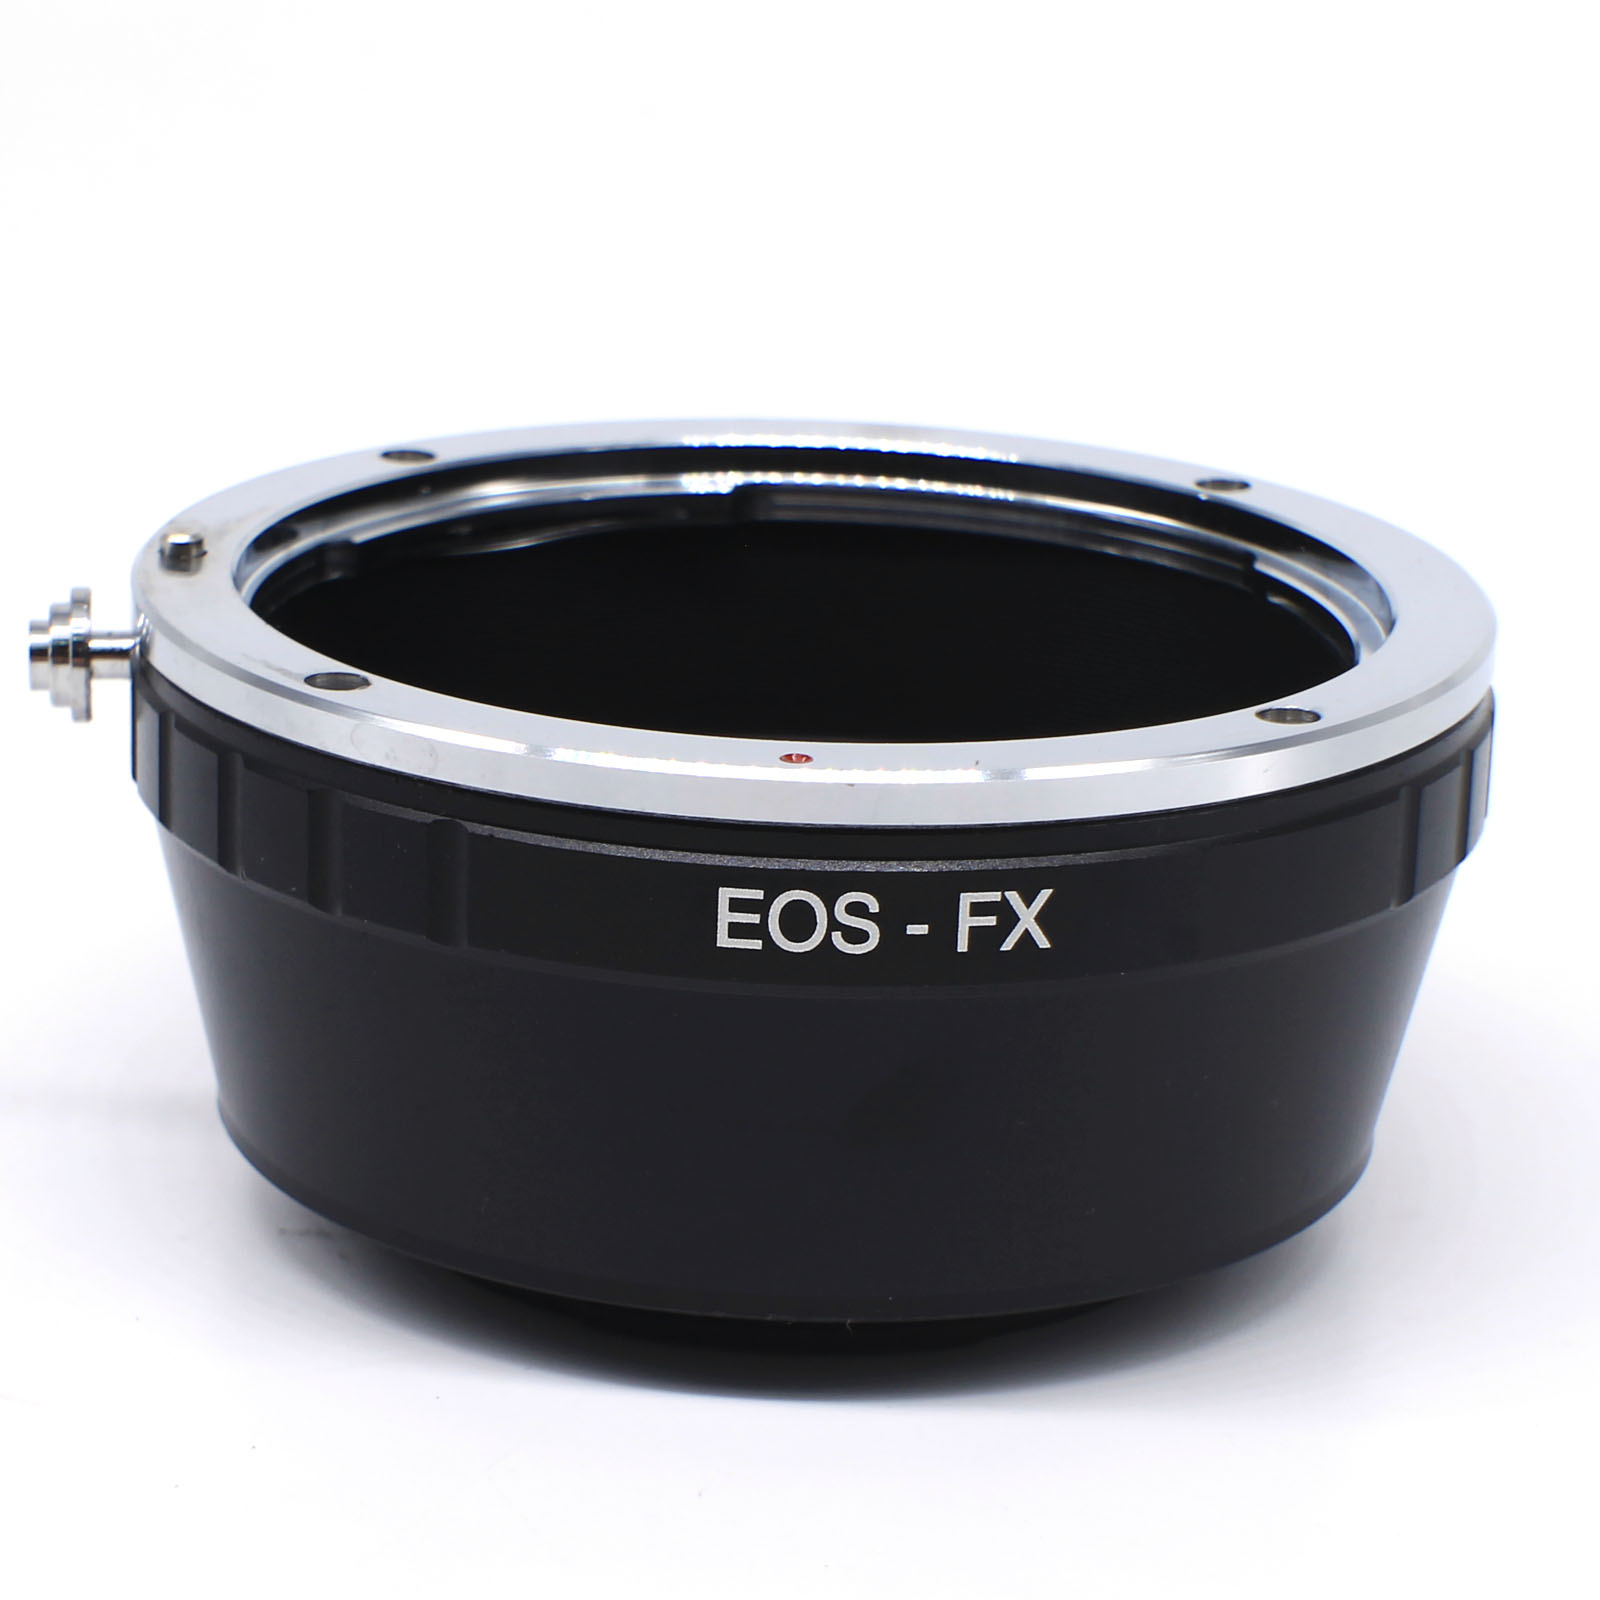      Canon EOS EF EF-S    Fujifilm X-Pro1   EOS-FX  